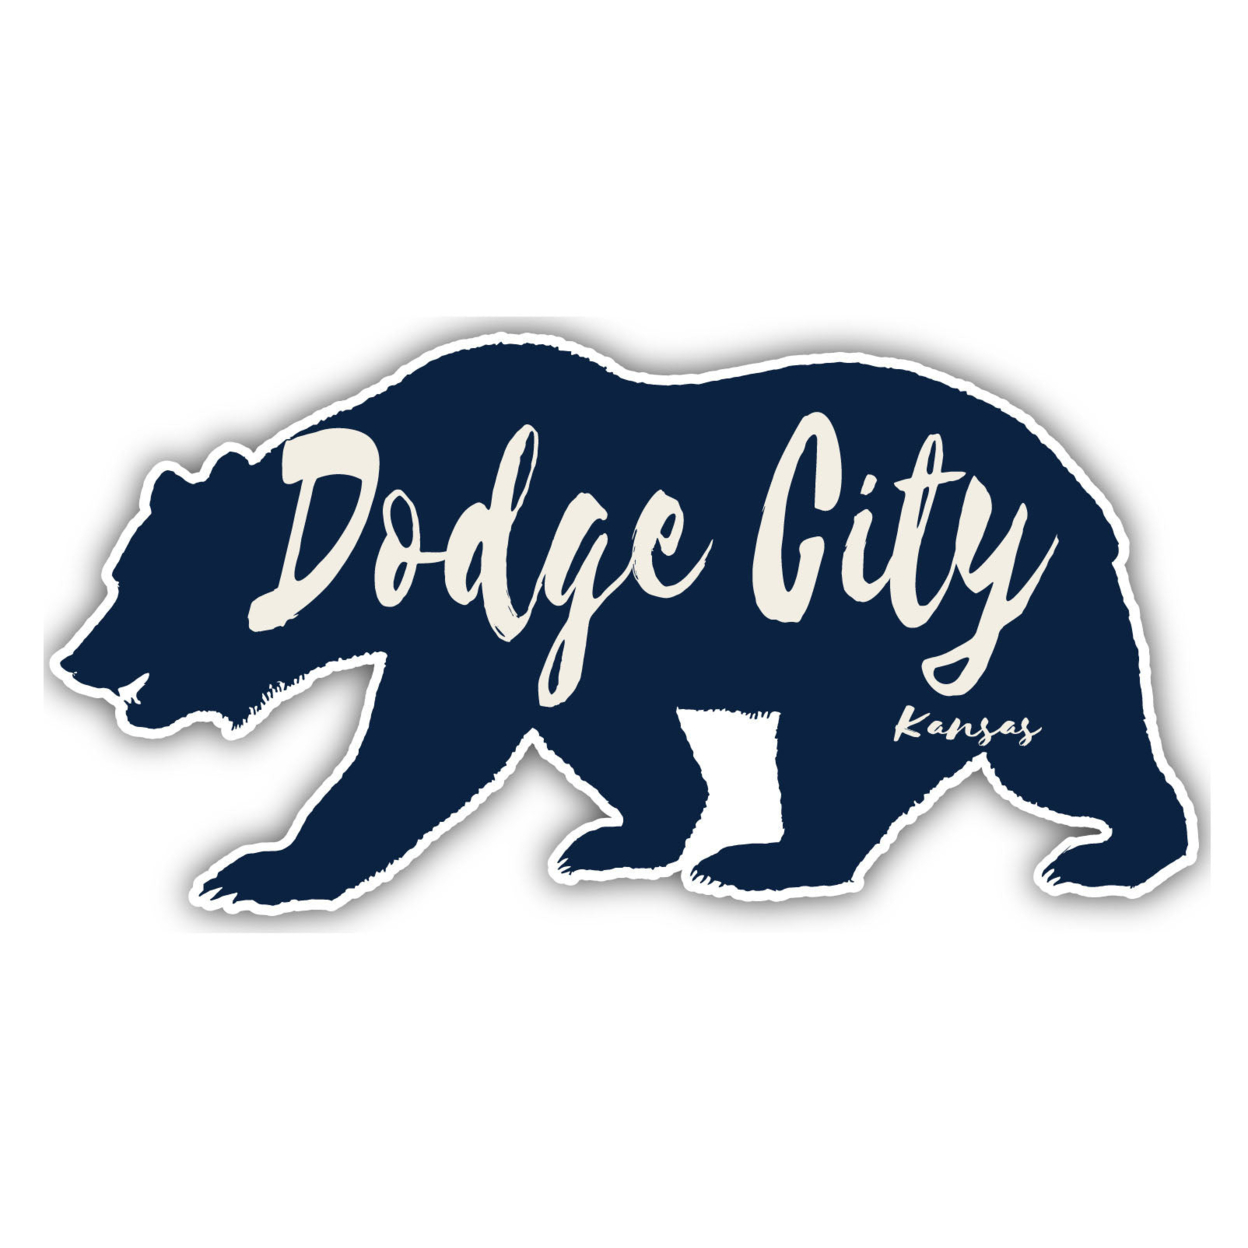 Dodge City Kansas Souvenir Decorative Stickers (Choose Theme And Size) - Single Unit, 6-Inch, Bear